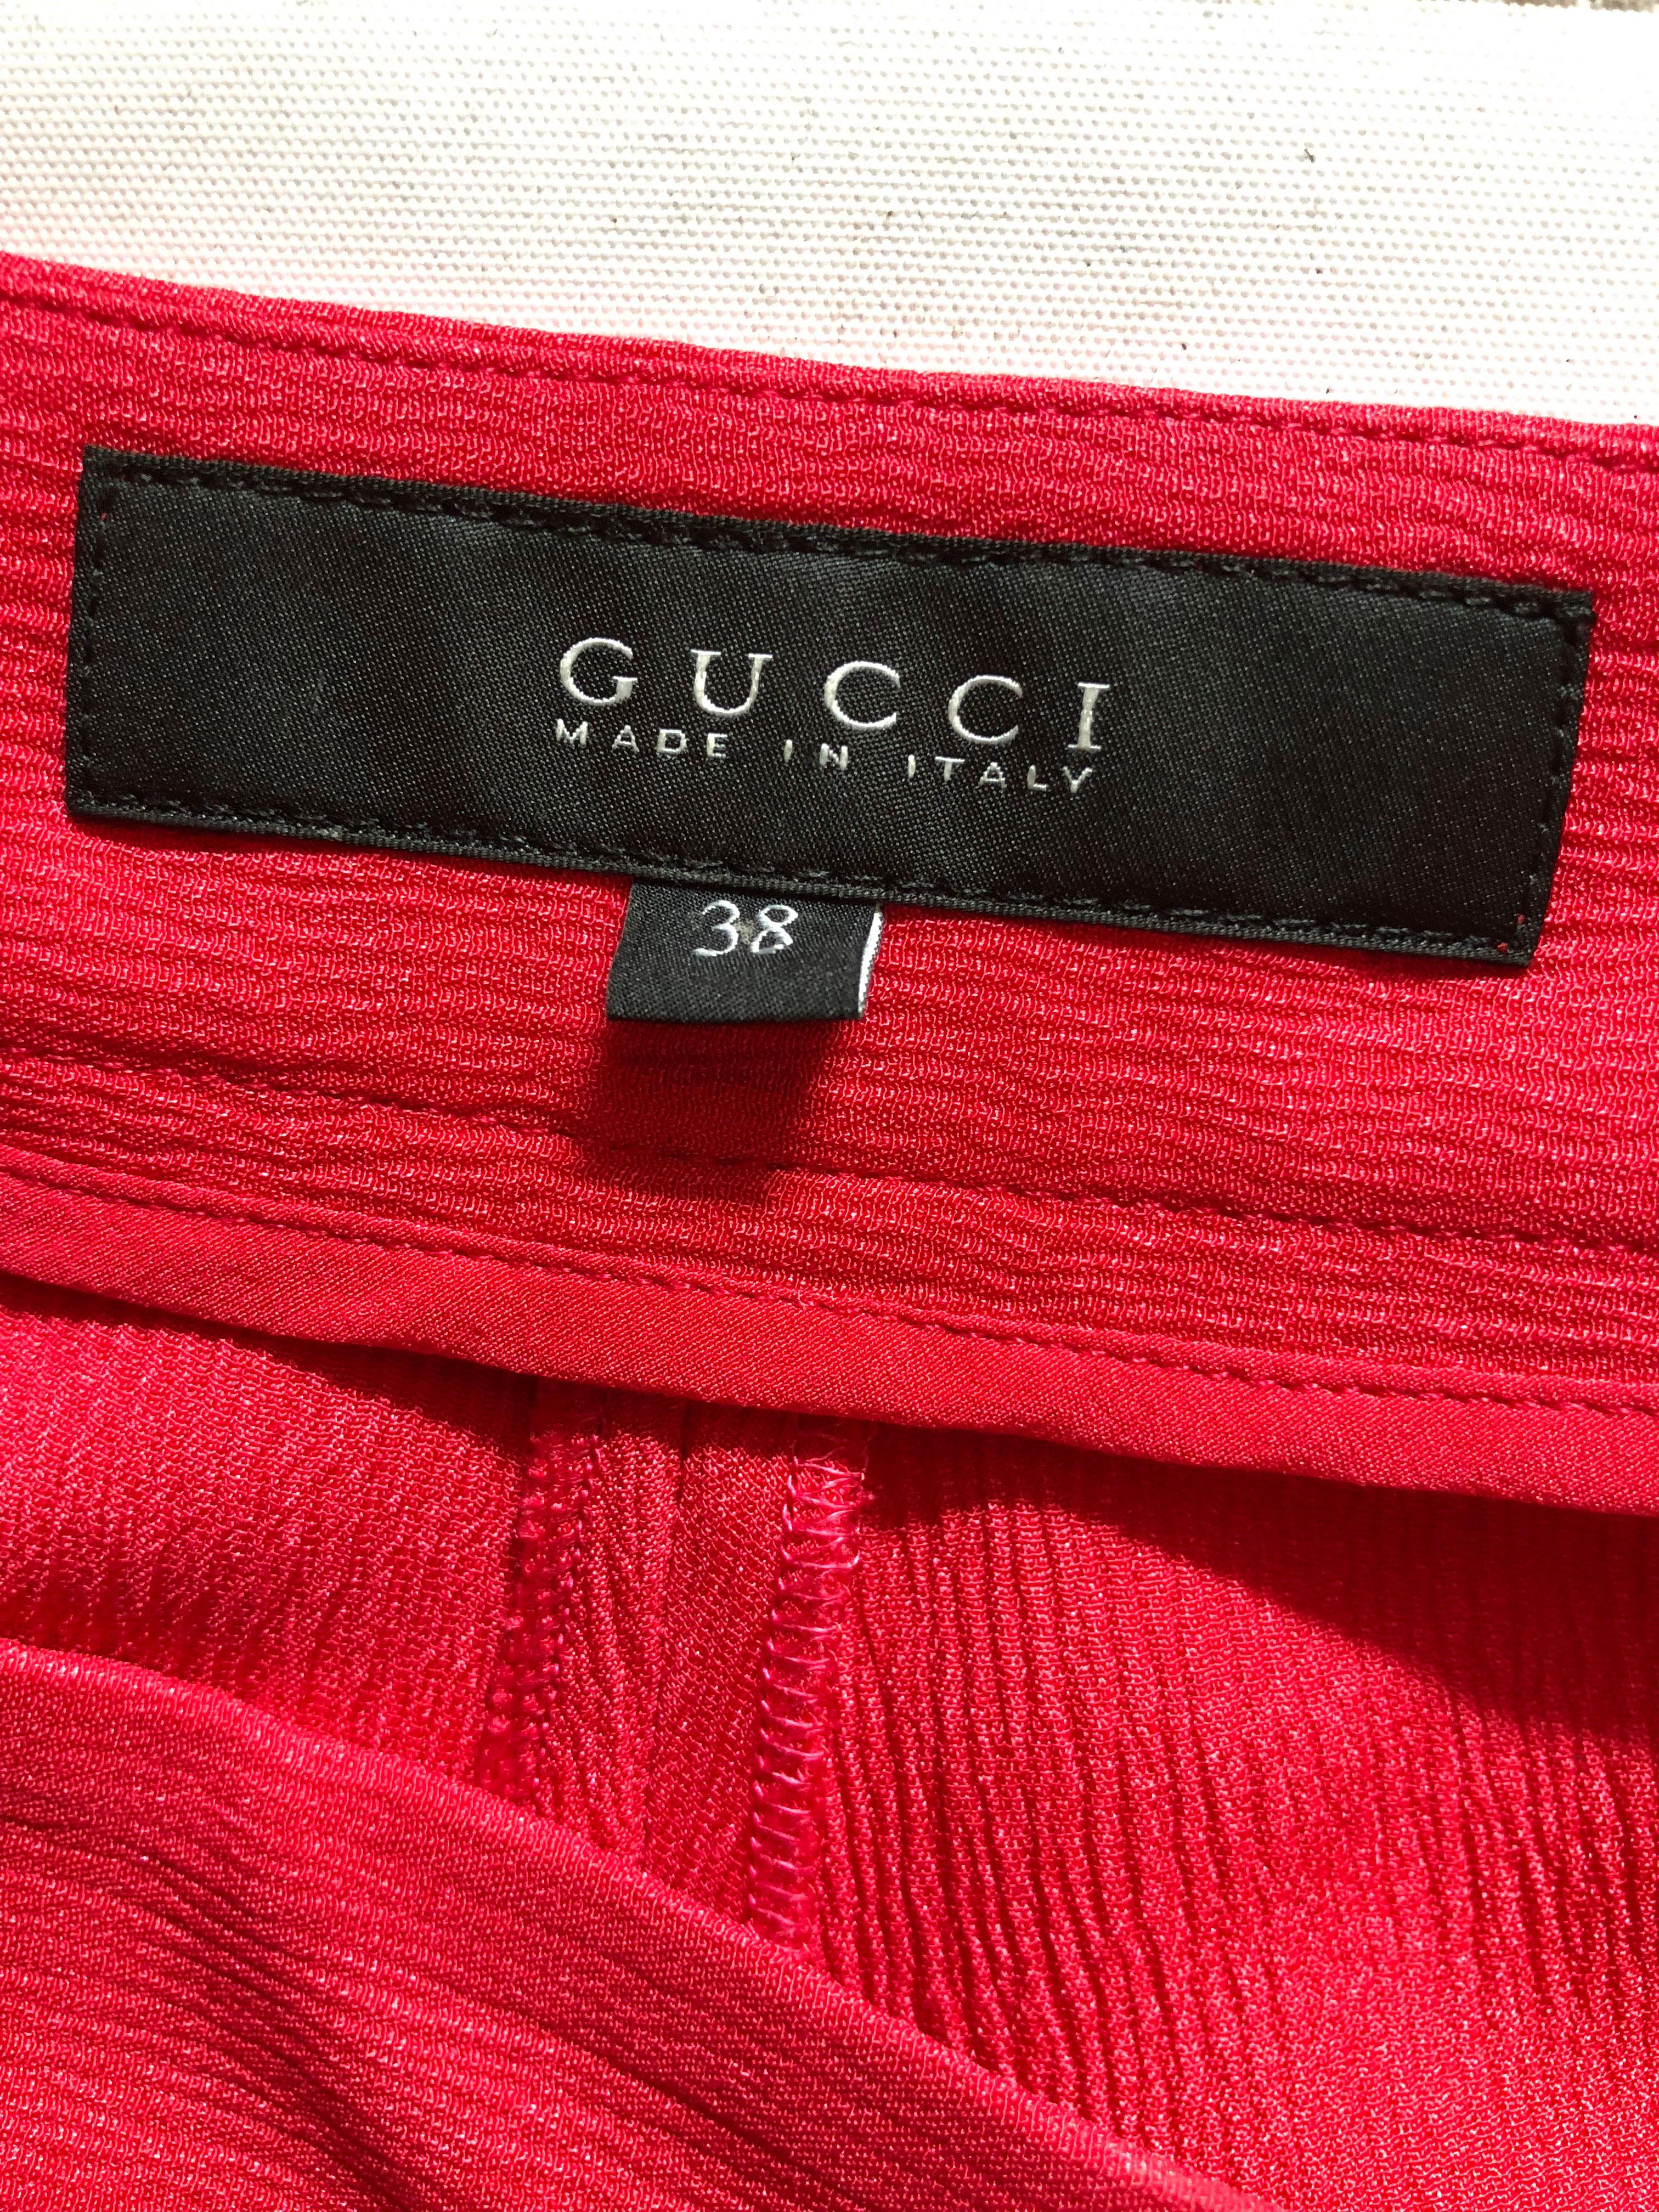 A stunning pair of silk pants by Gucci. Size 38, waist 29'',inside leg 35''